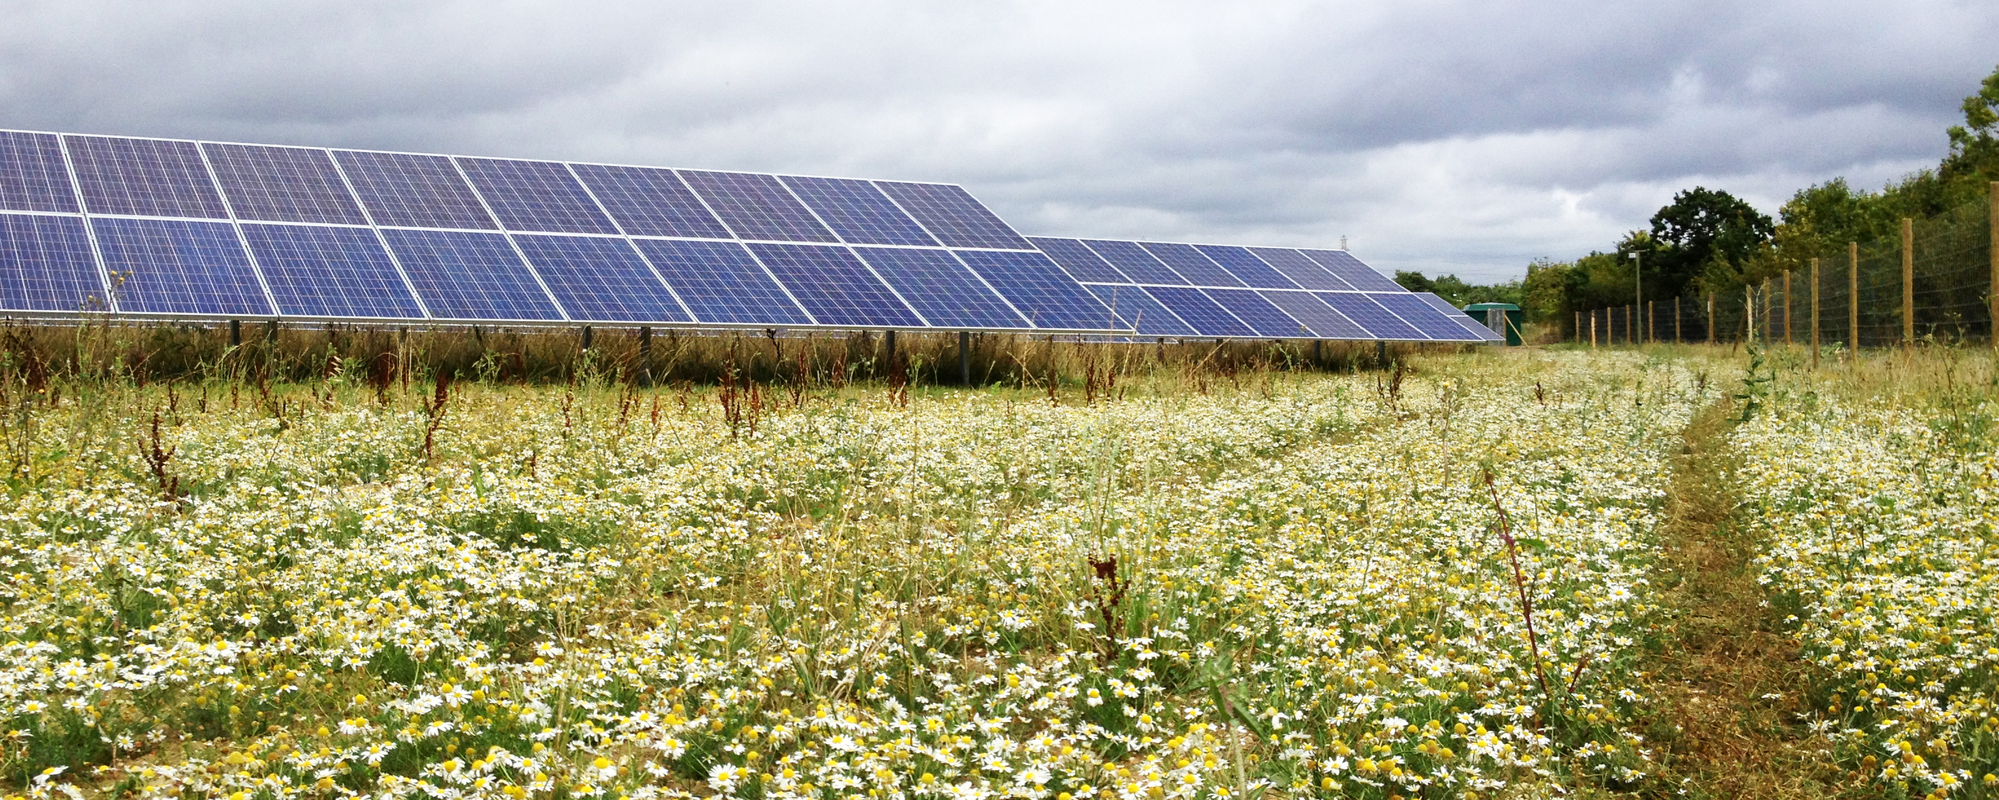 solar panels in a meadow of wild flowers